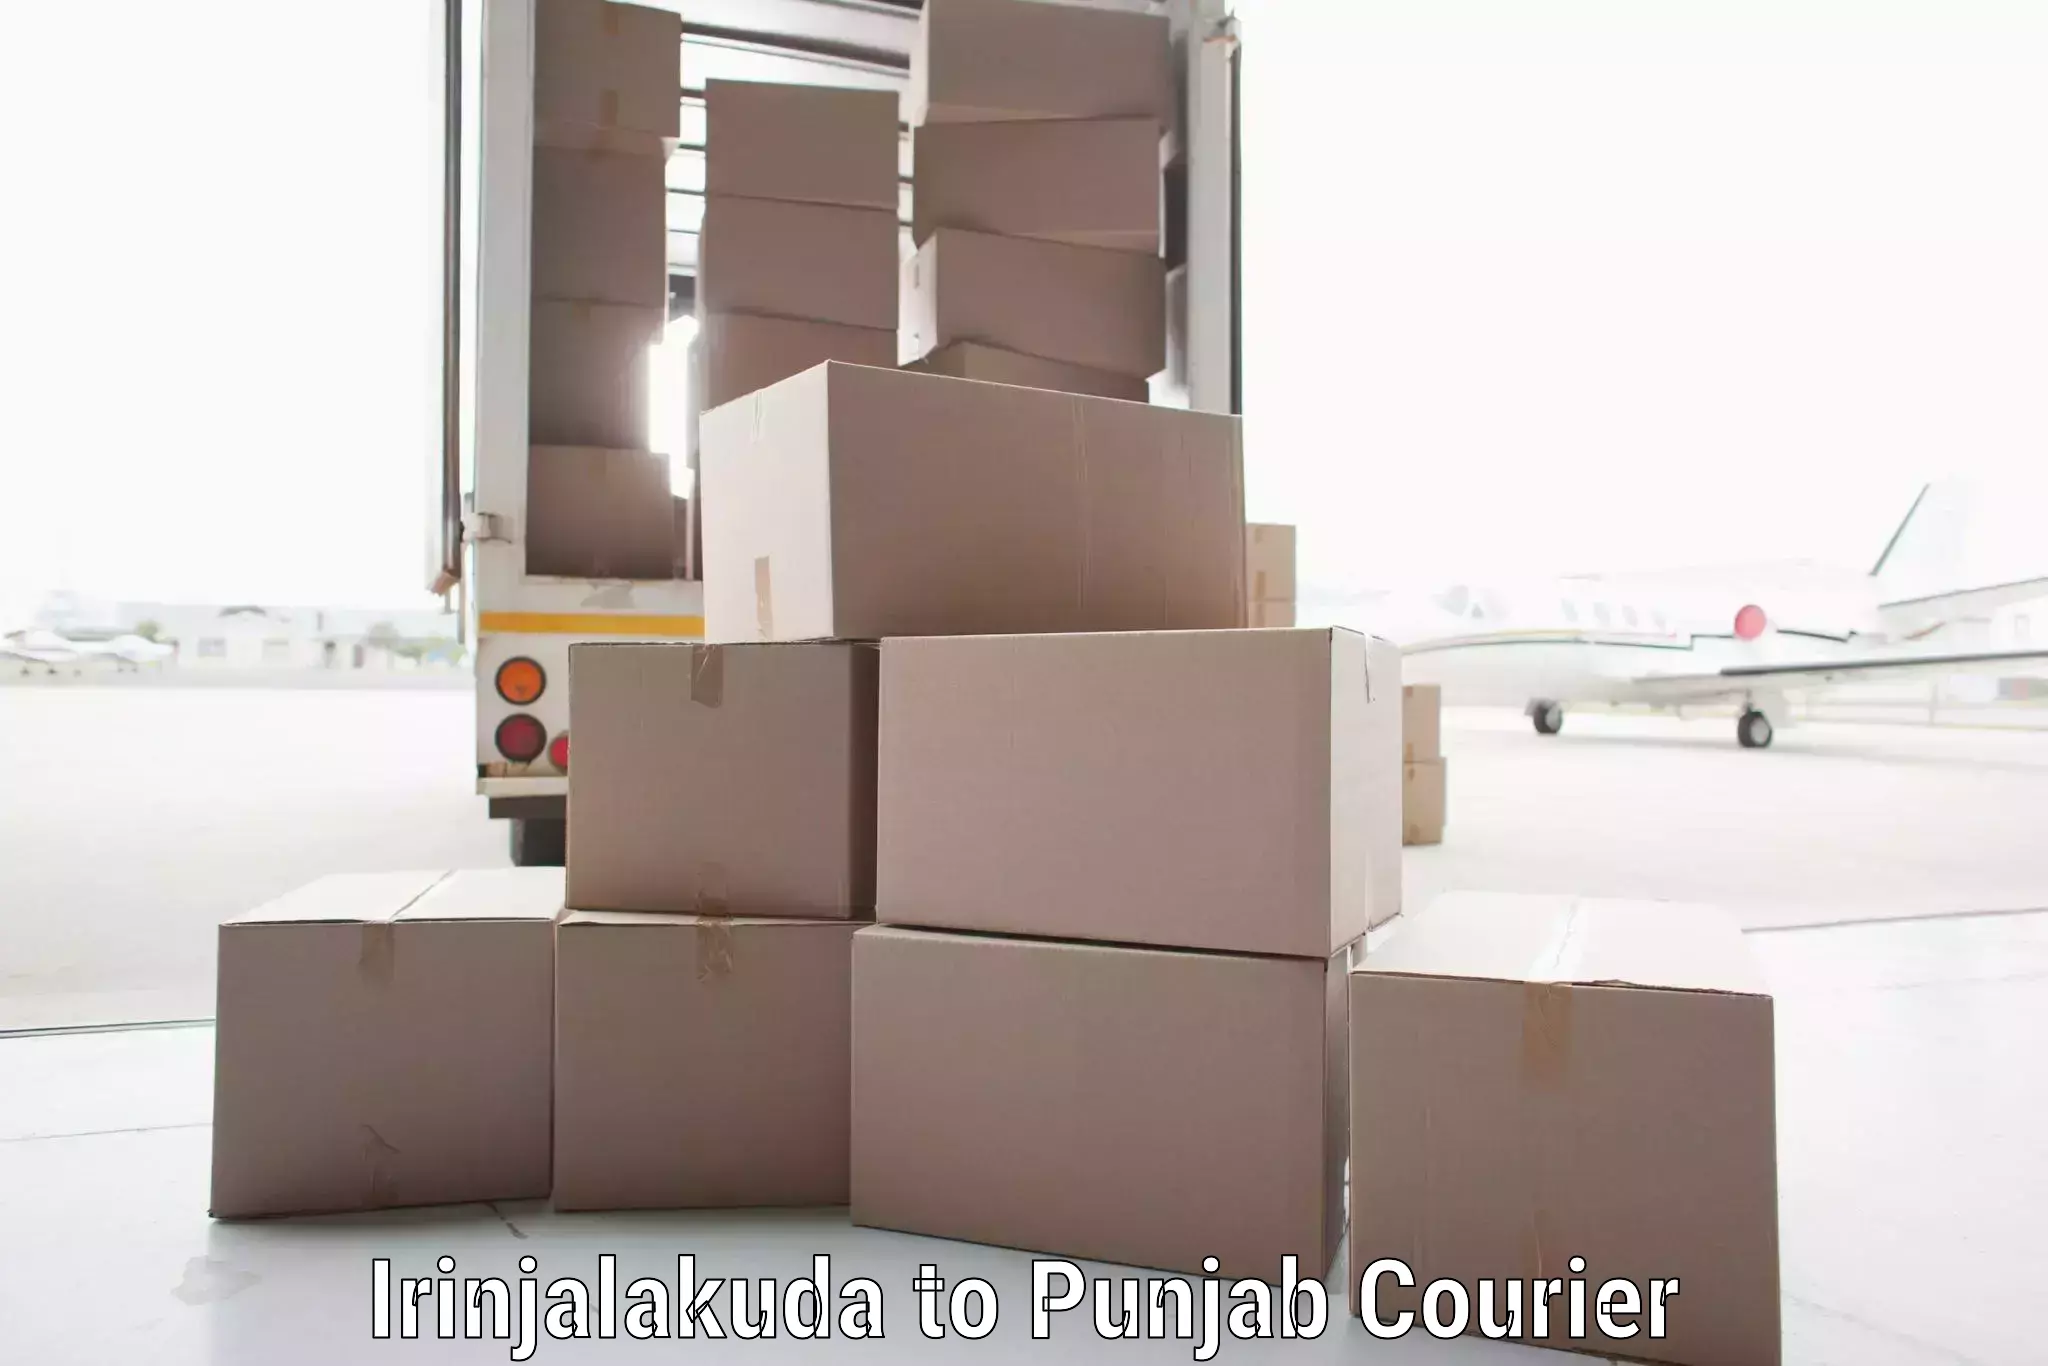 Quick dispatch service Irinjalakuda to Punjab